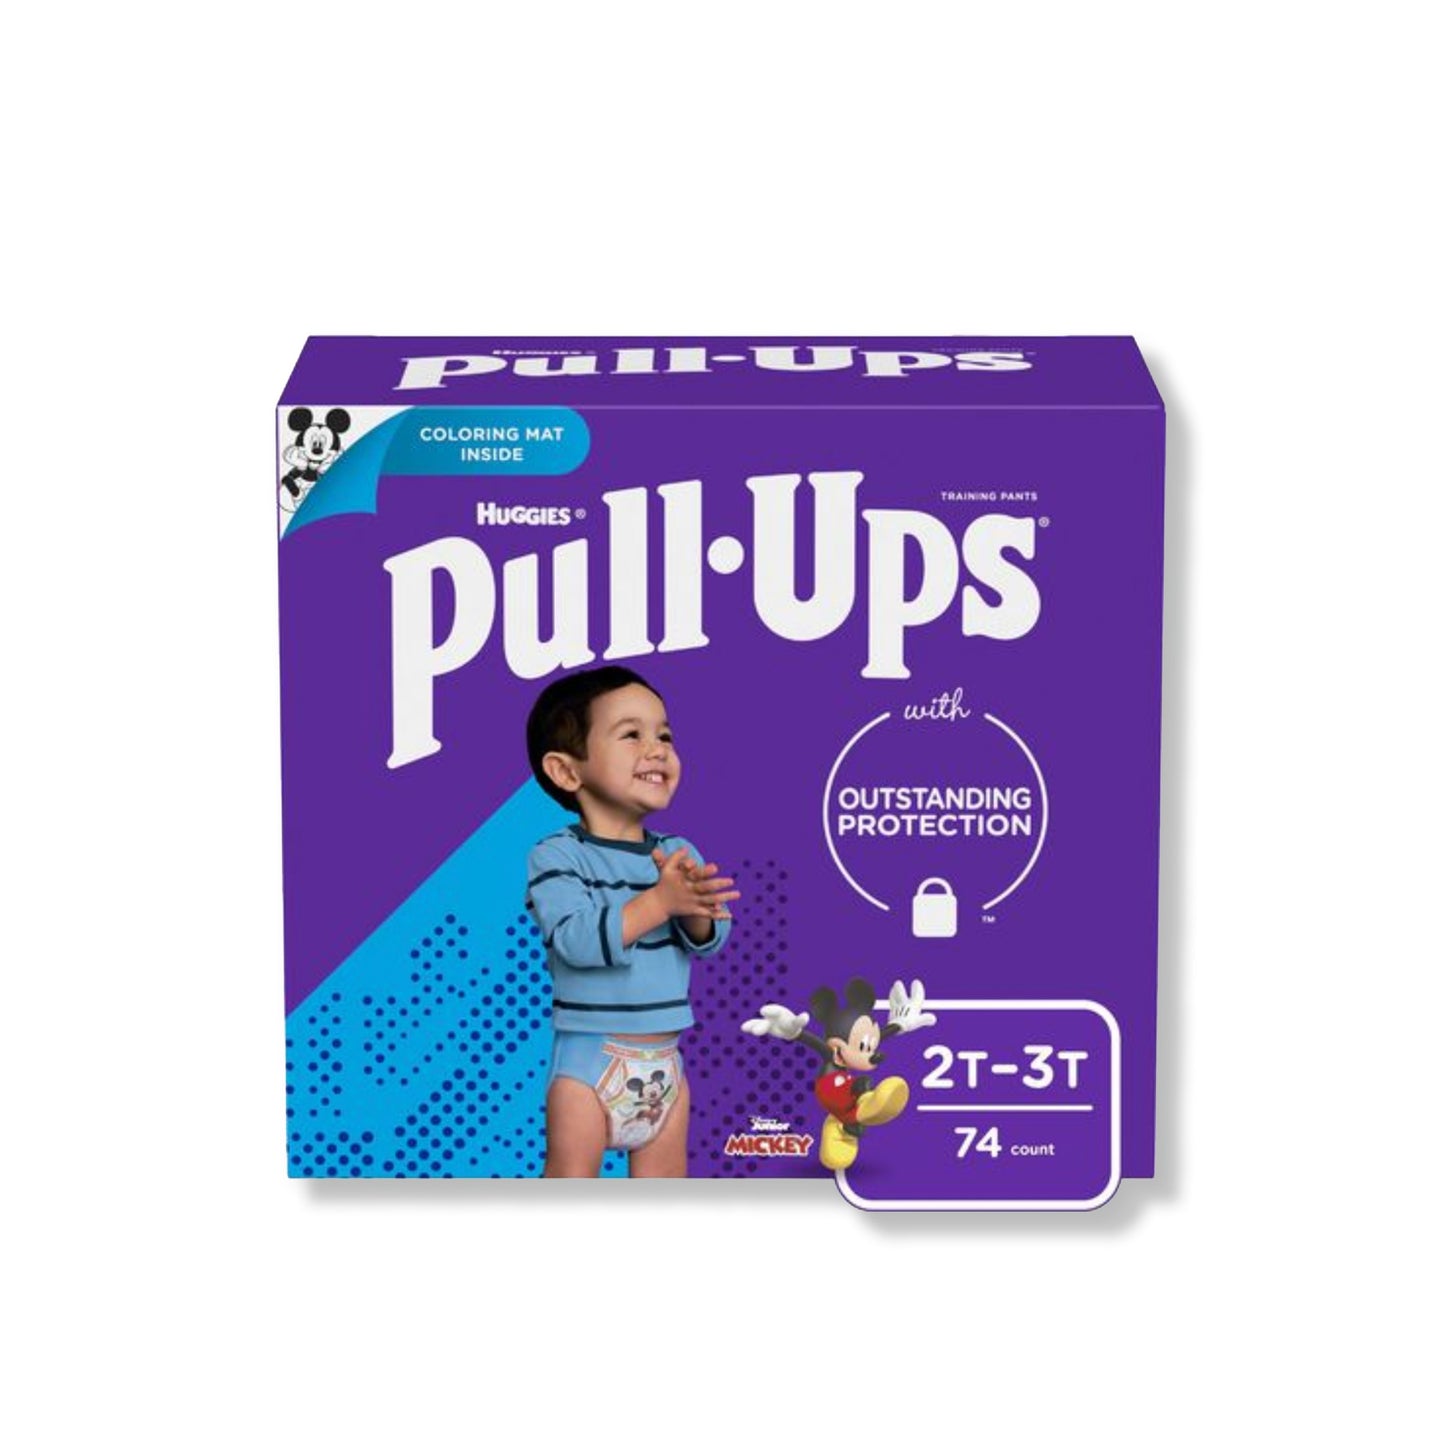 Boys' Potty Training Pants, 2T-3T, 74 units – Pull-Ups : Training